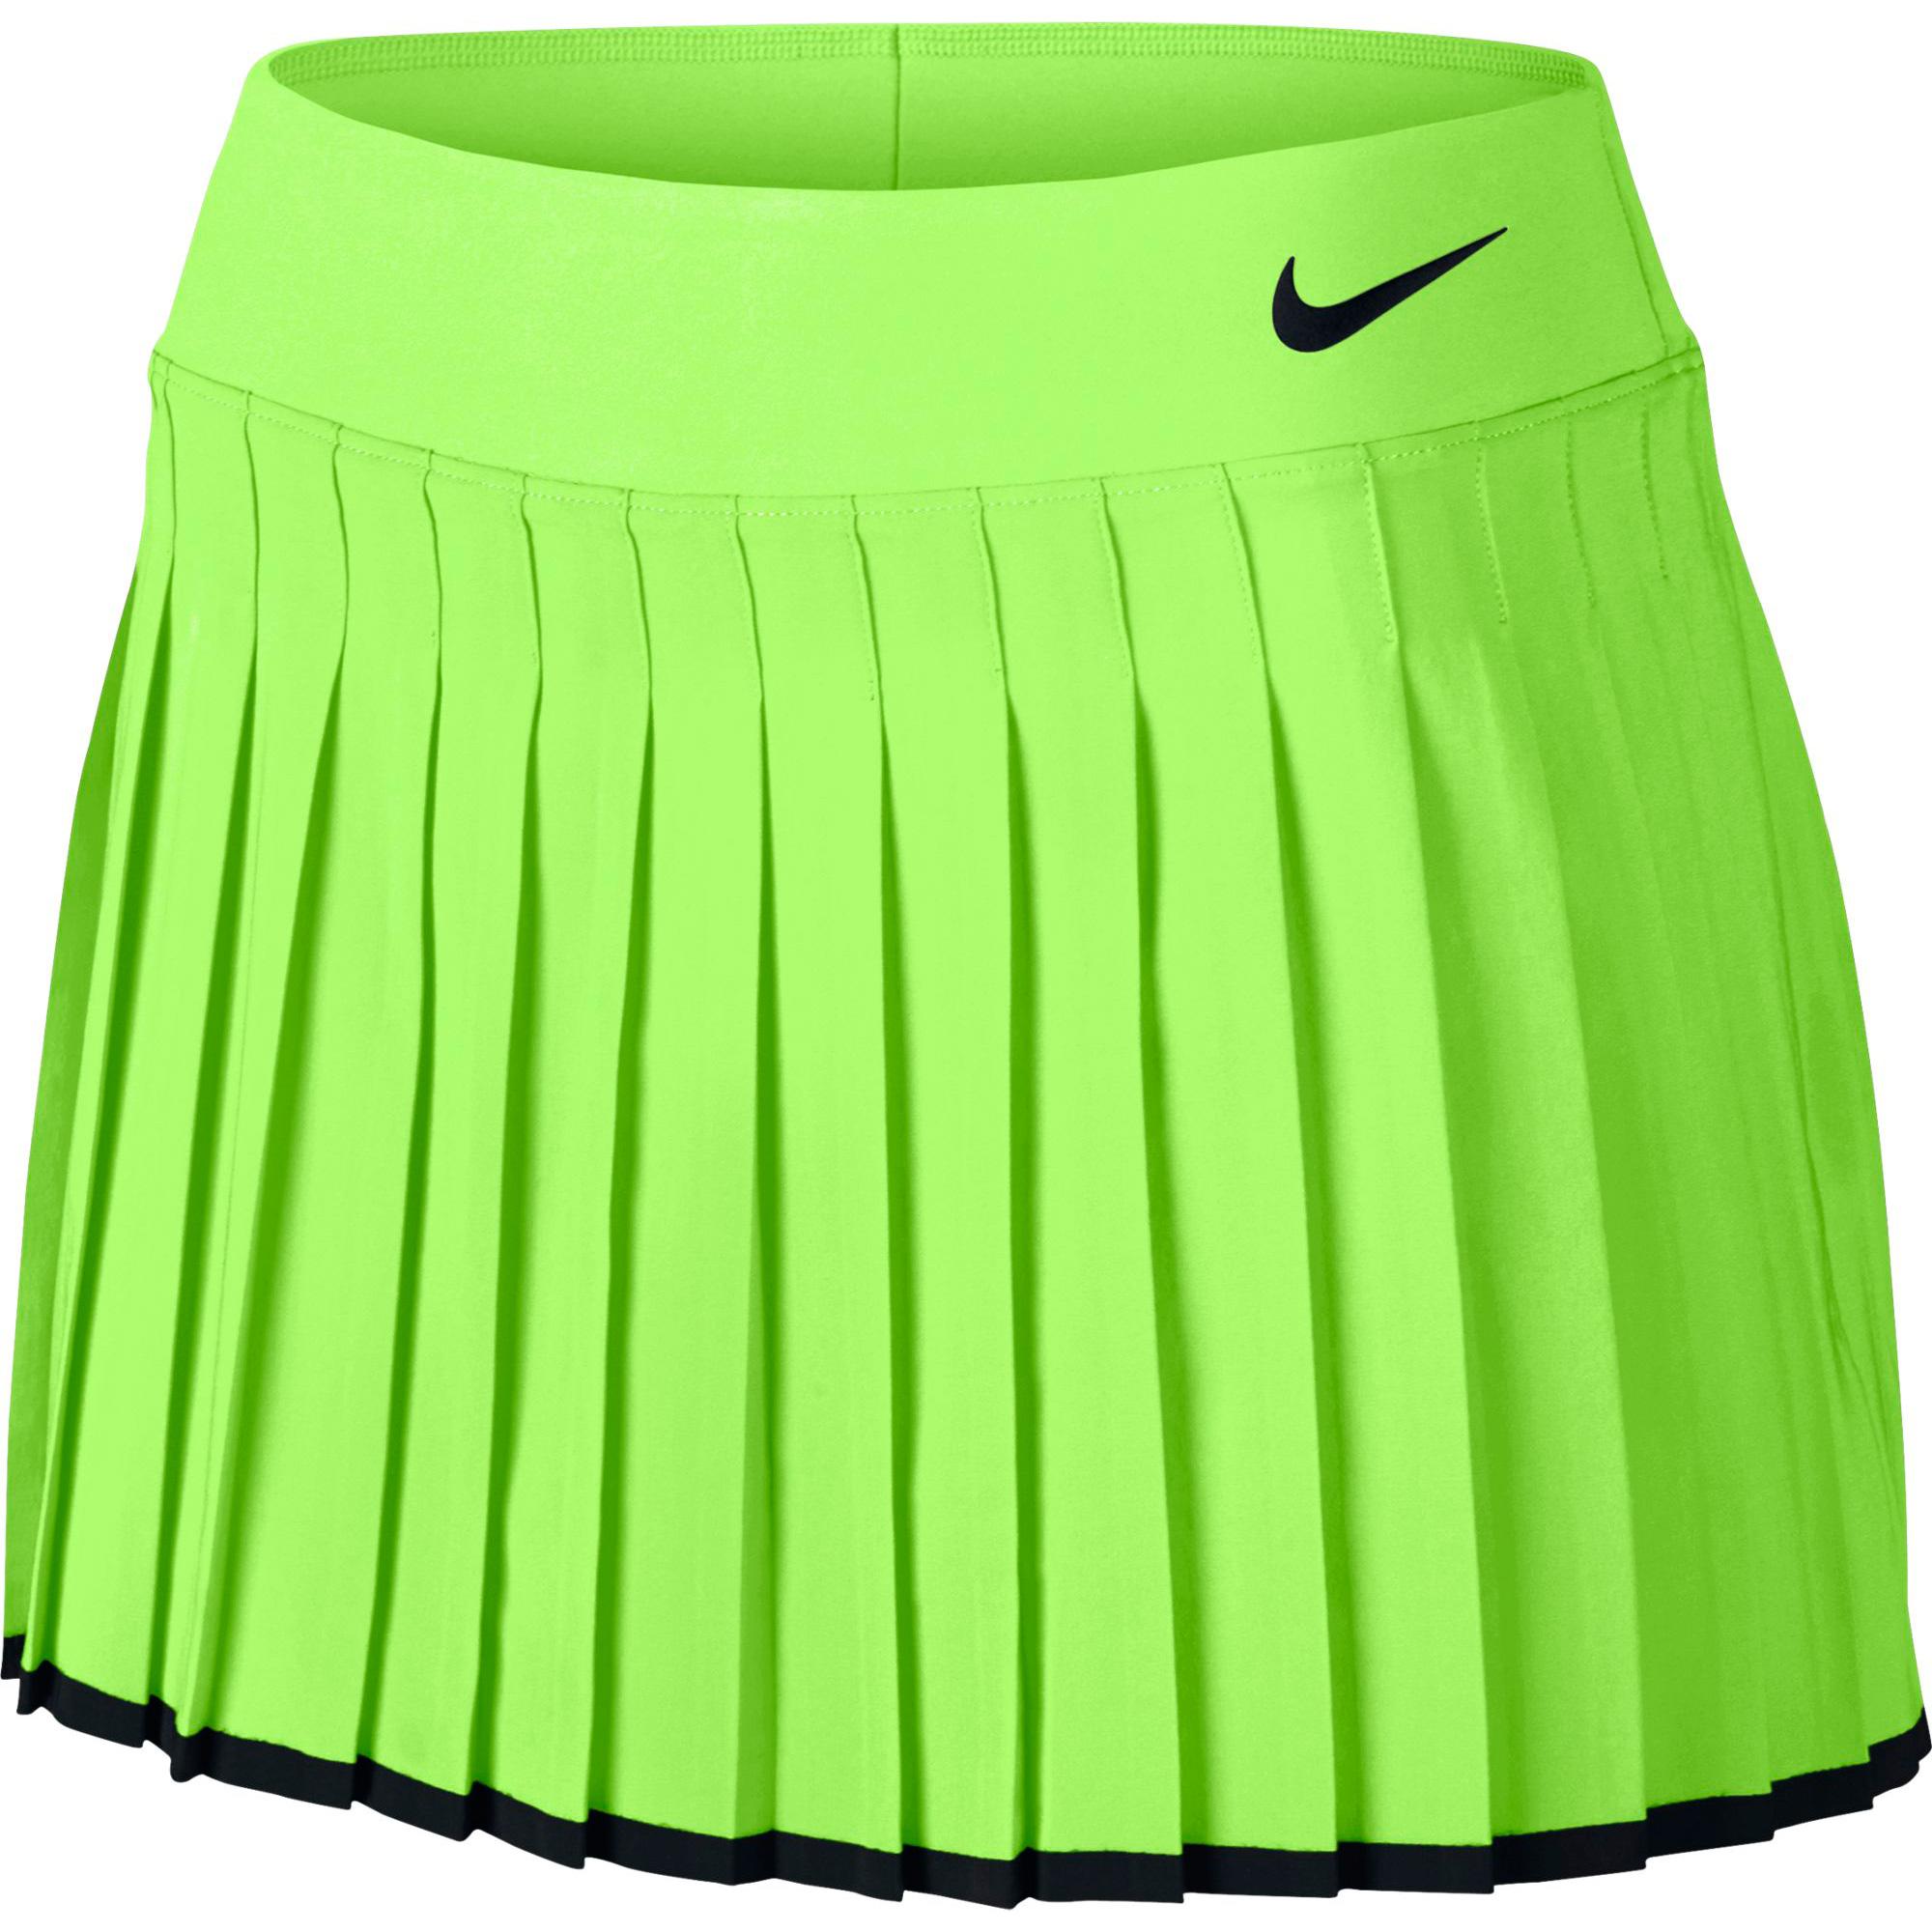 Вайлдберриз магазин юбки. Юбка для тенниса Nike. Теннисная юбка найк. Теннисная юбка адидас. Nike теннисная юбка 2020.